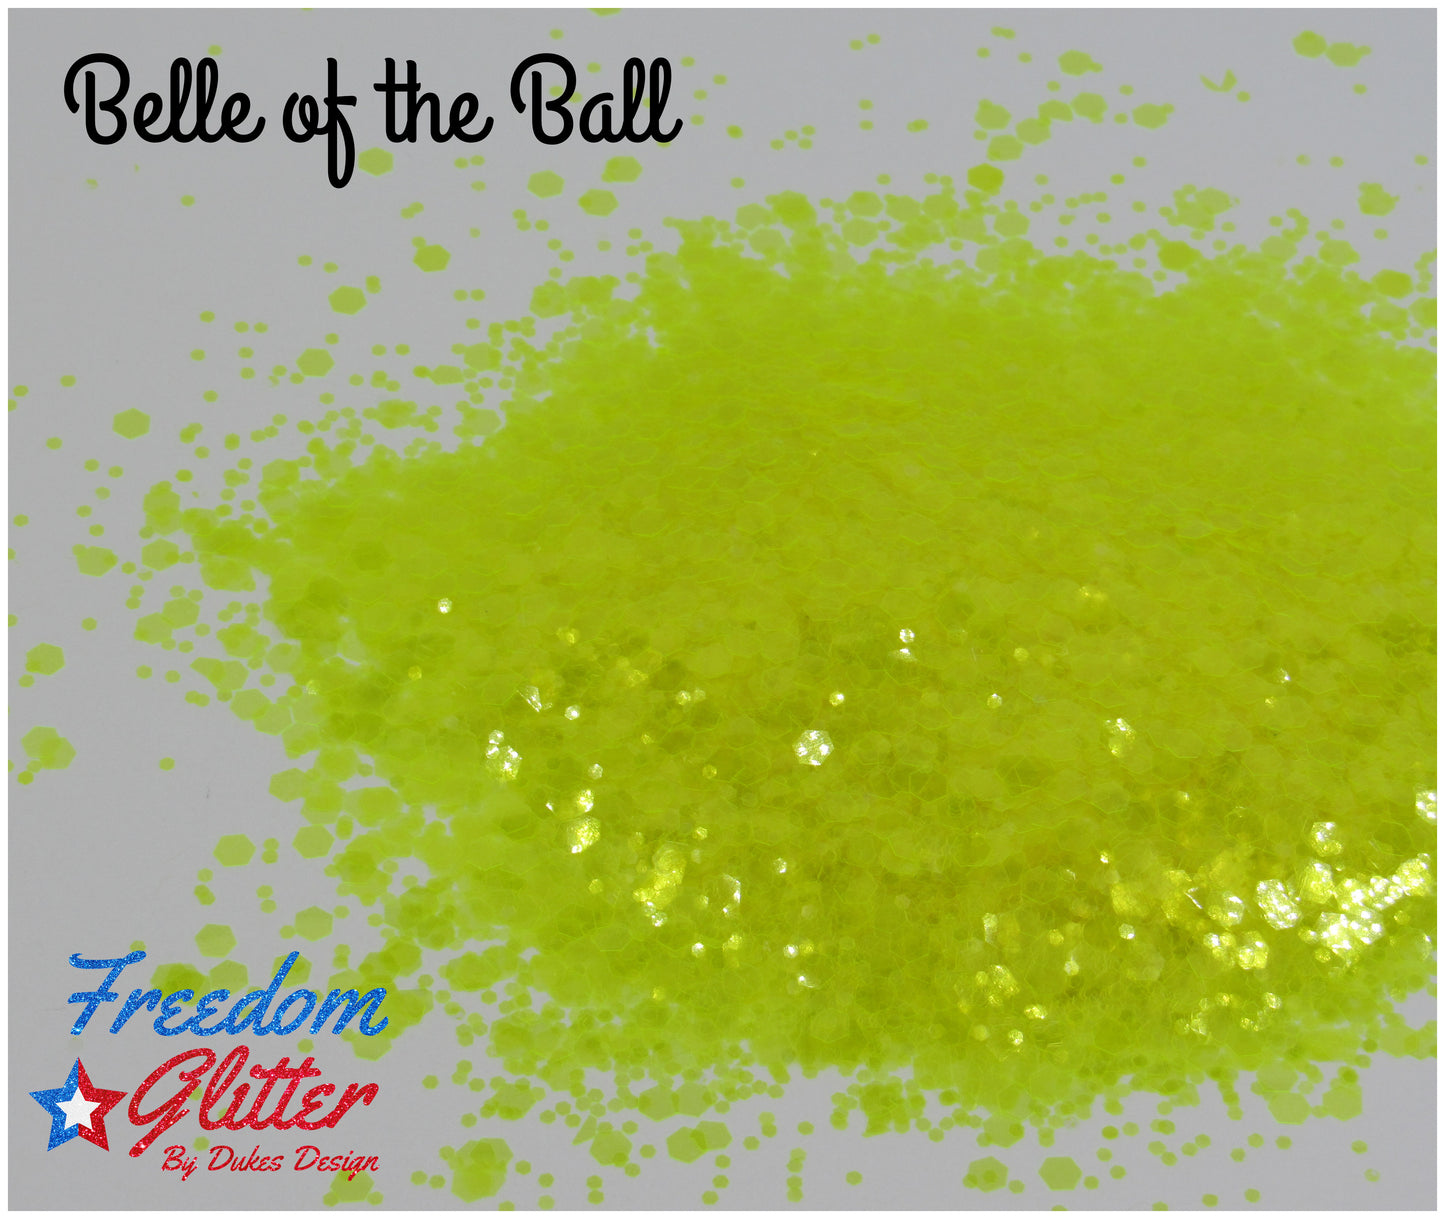 Belle of the Ball (Iridescent Glitter)